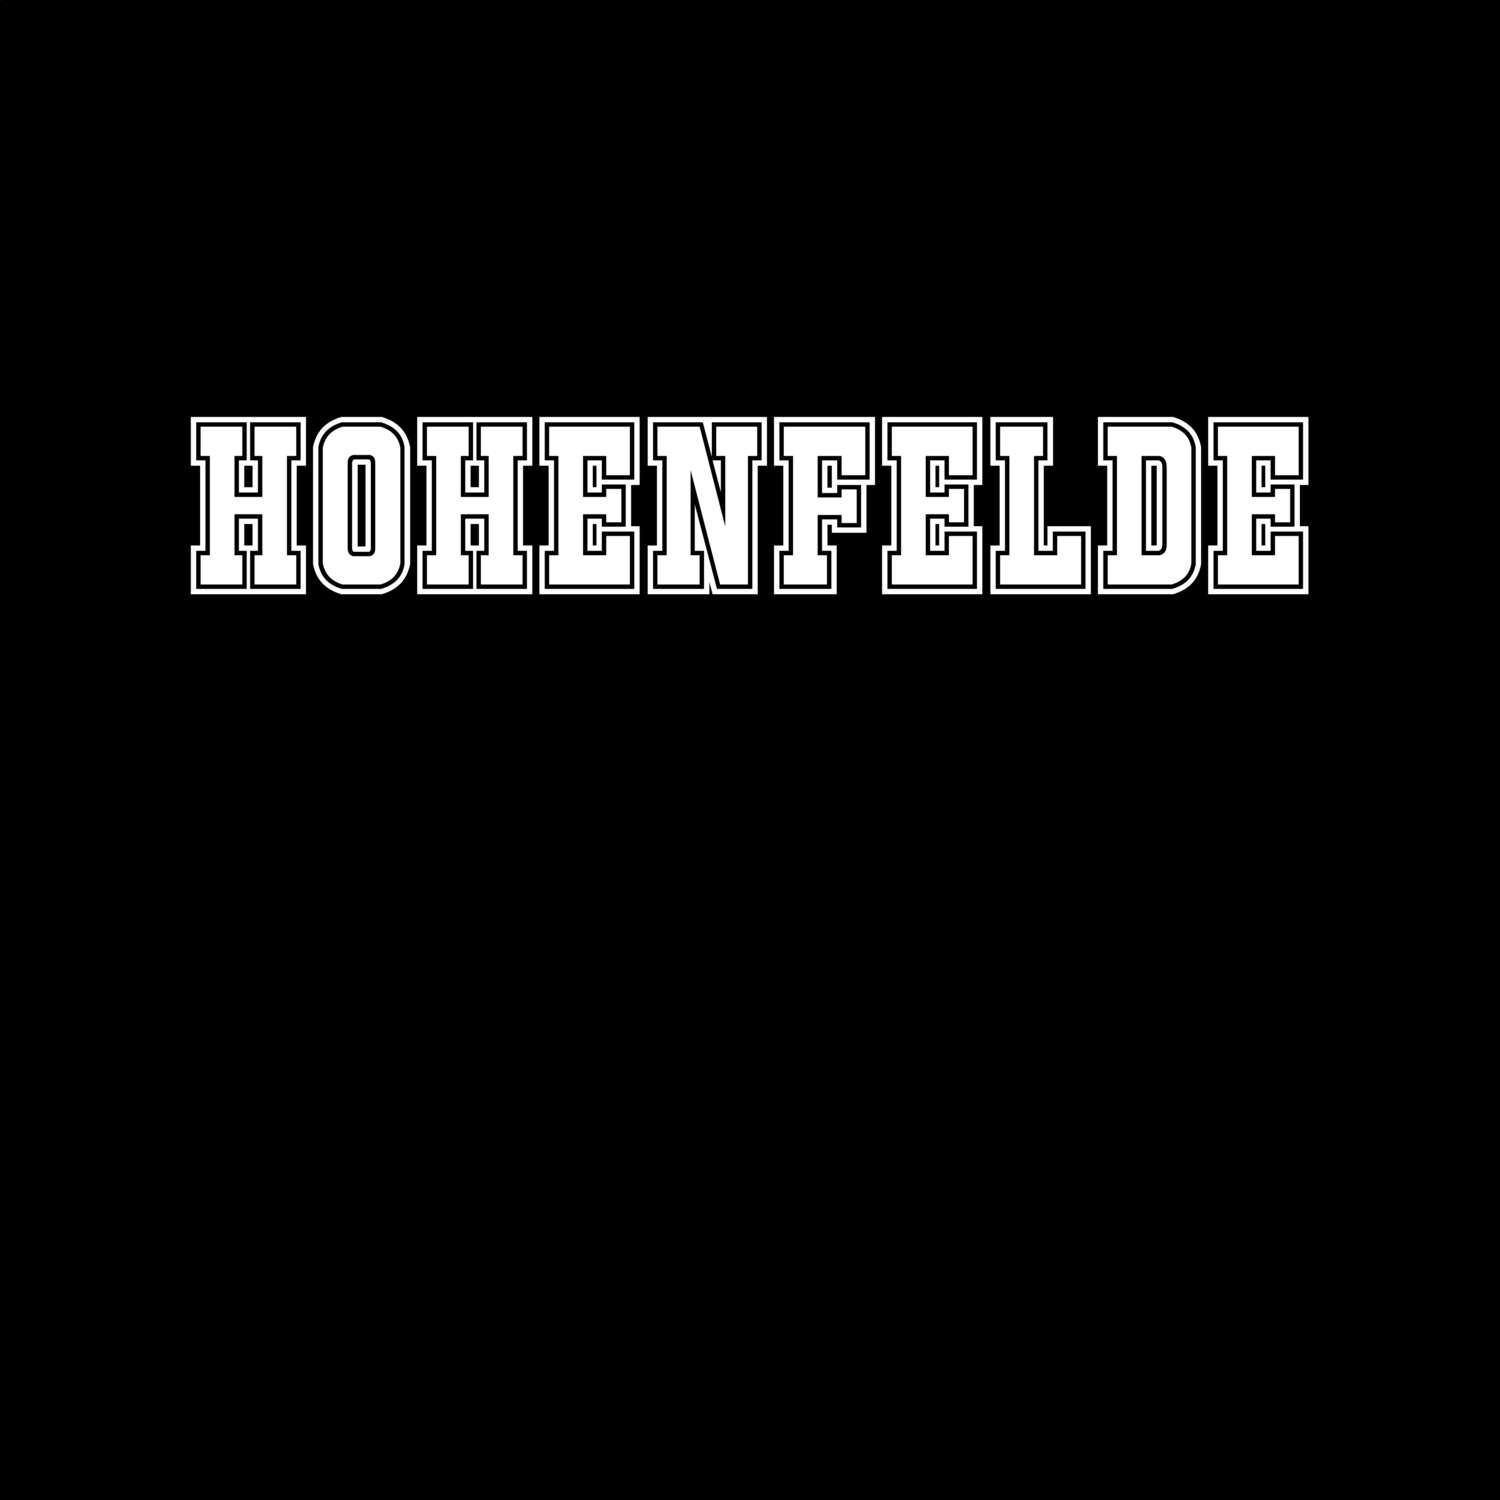 Hohenfelde T-Shirt »Classic«